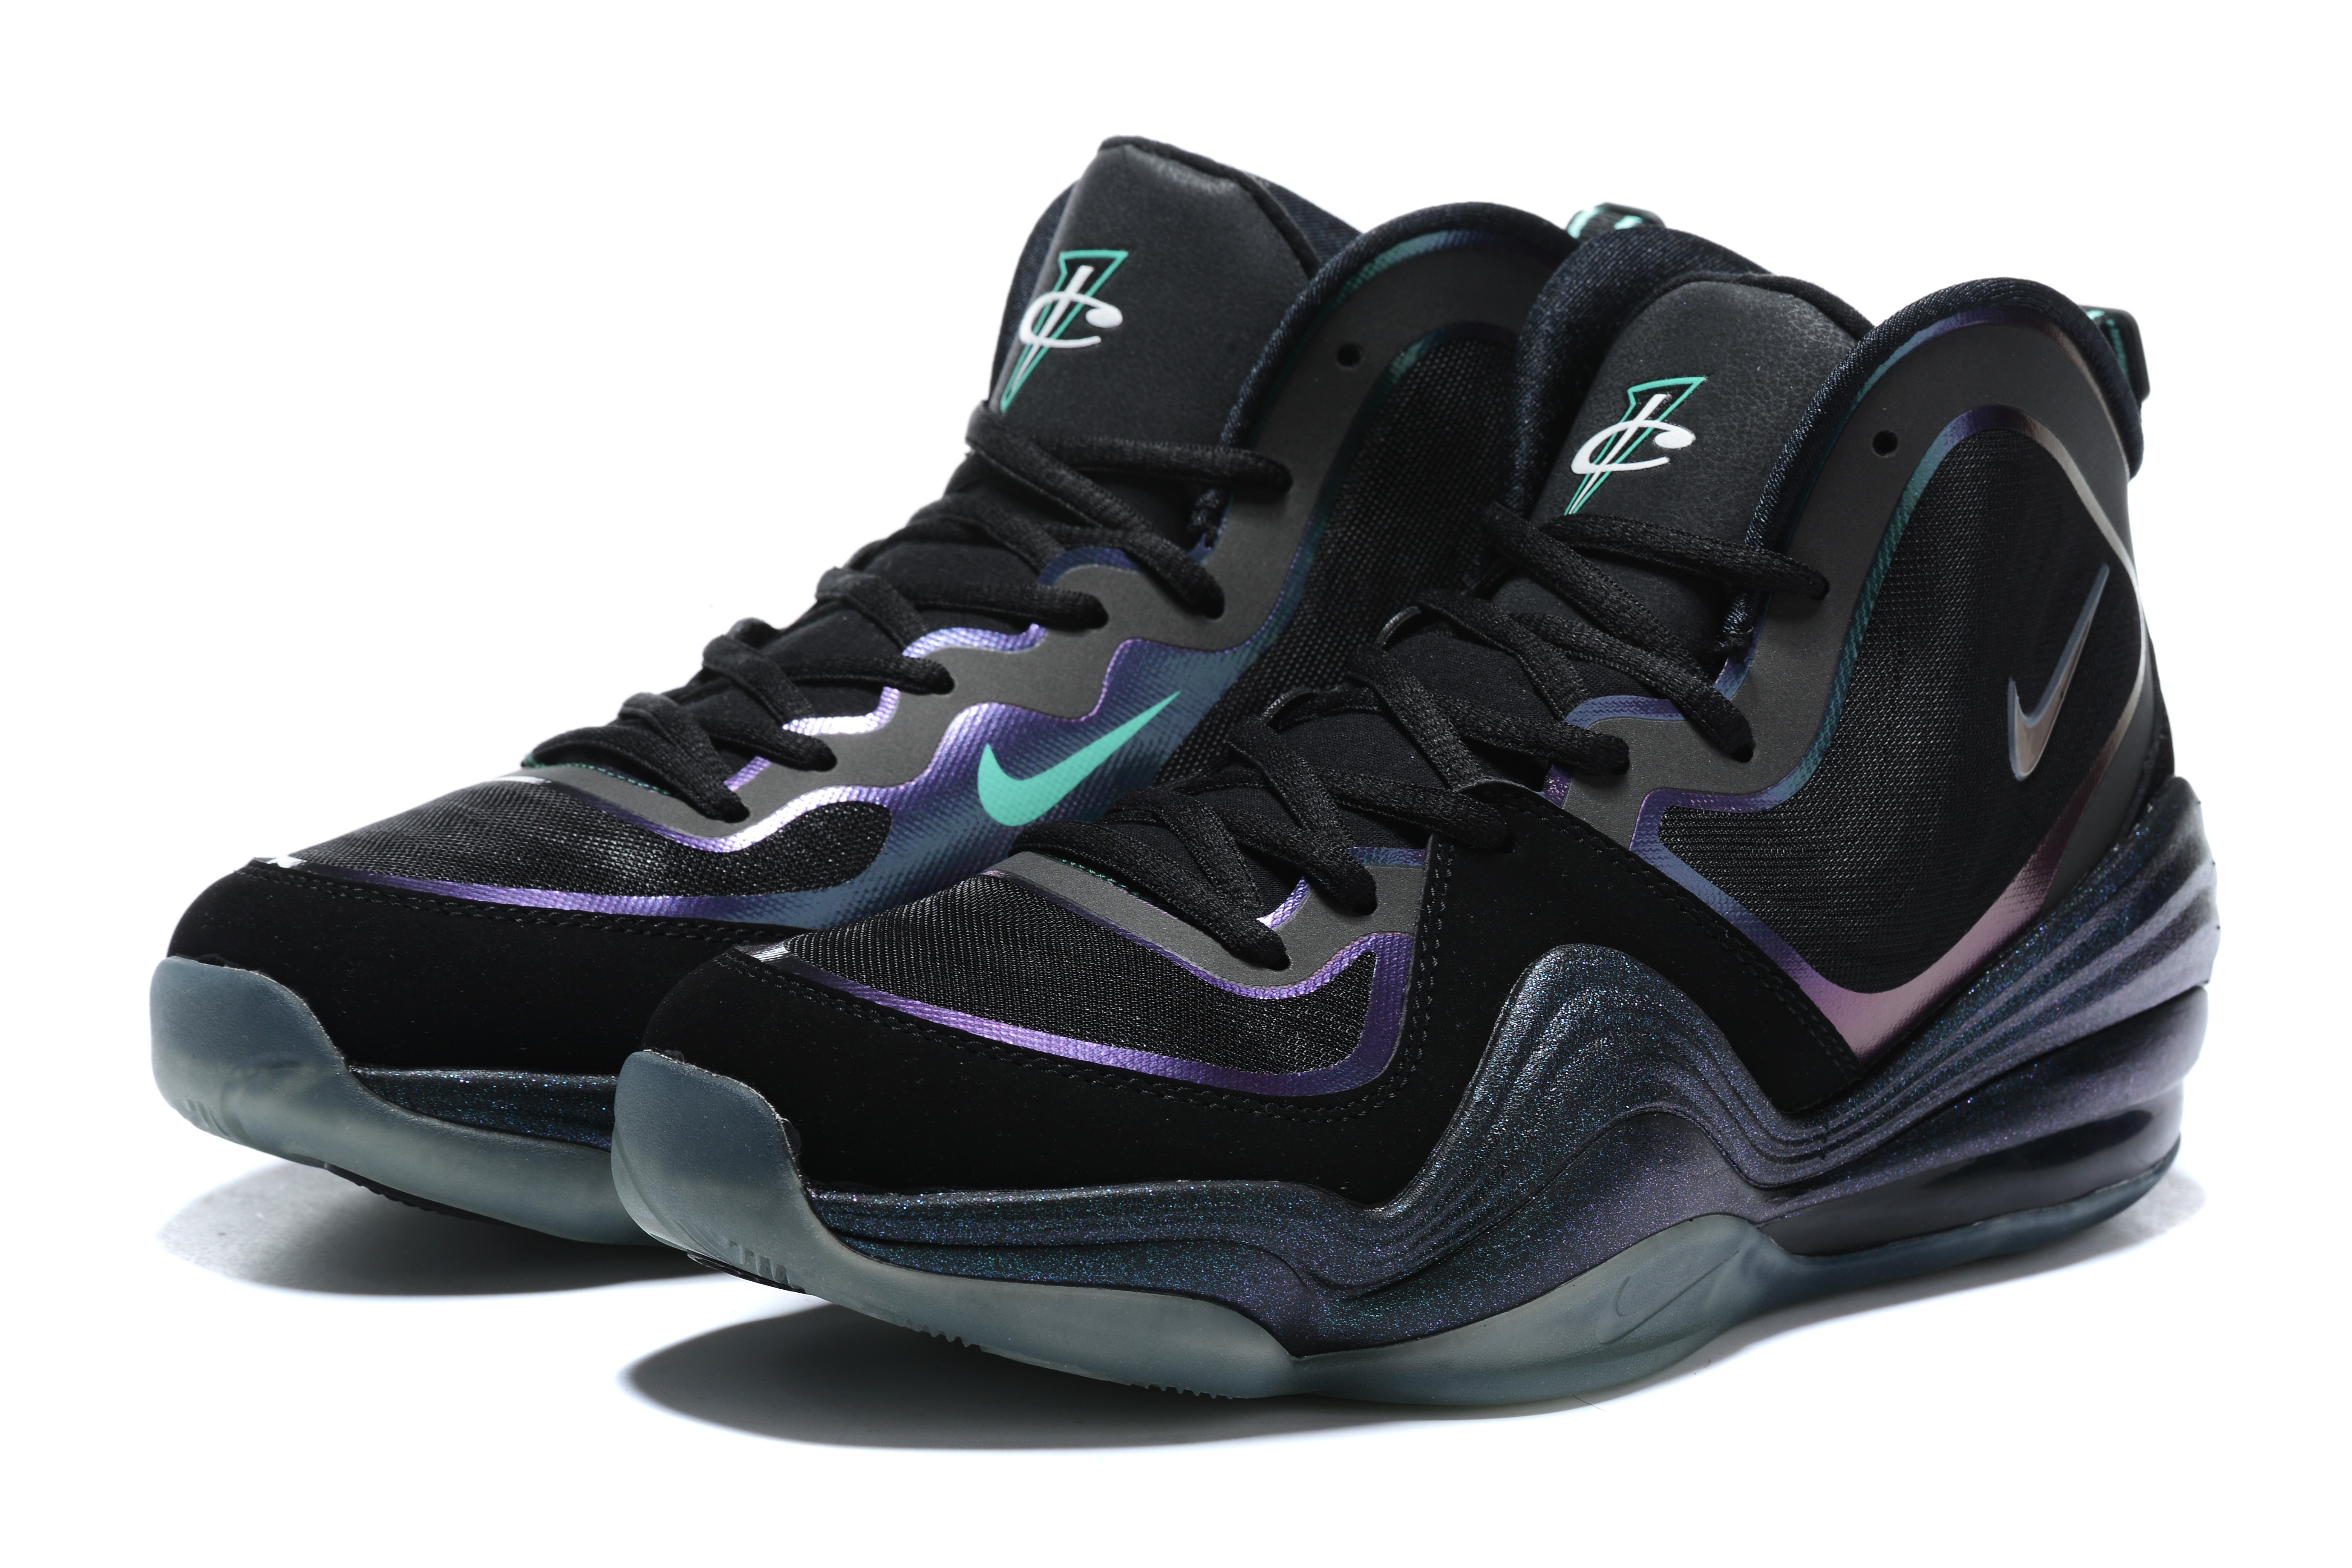 2020 Nike Penny Hardaway V Black Jade Basketball Shoes